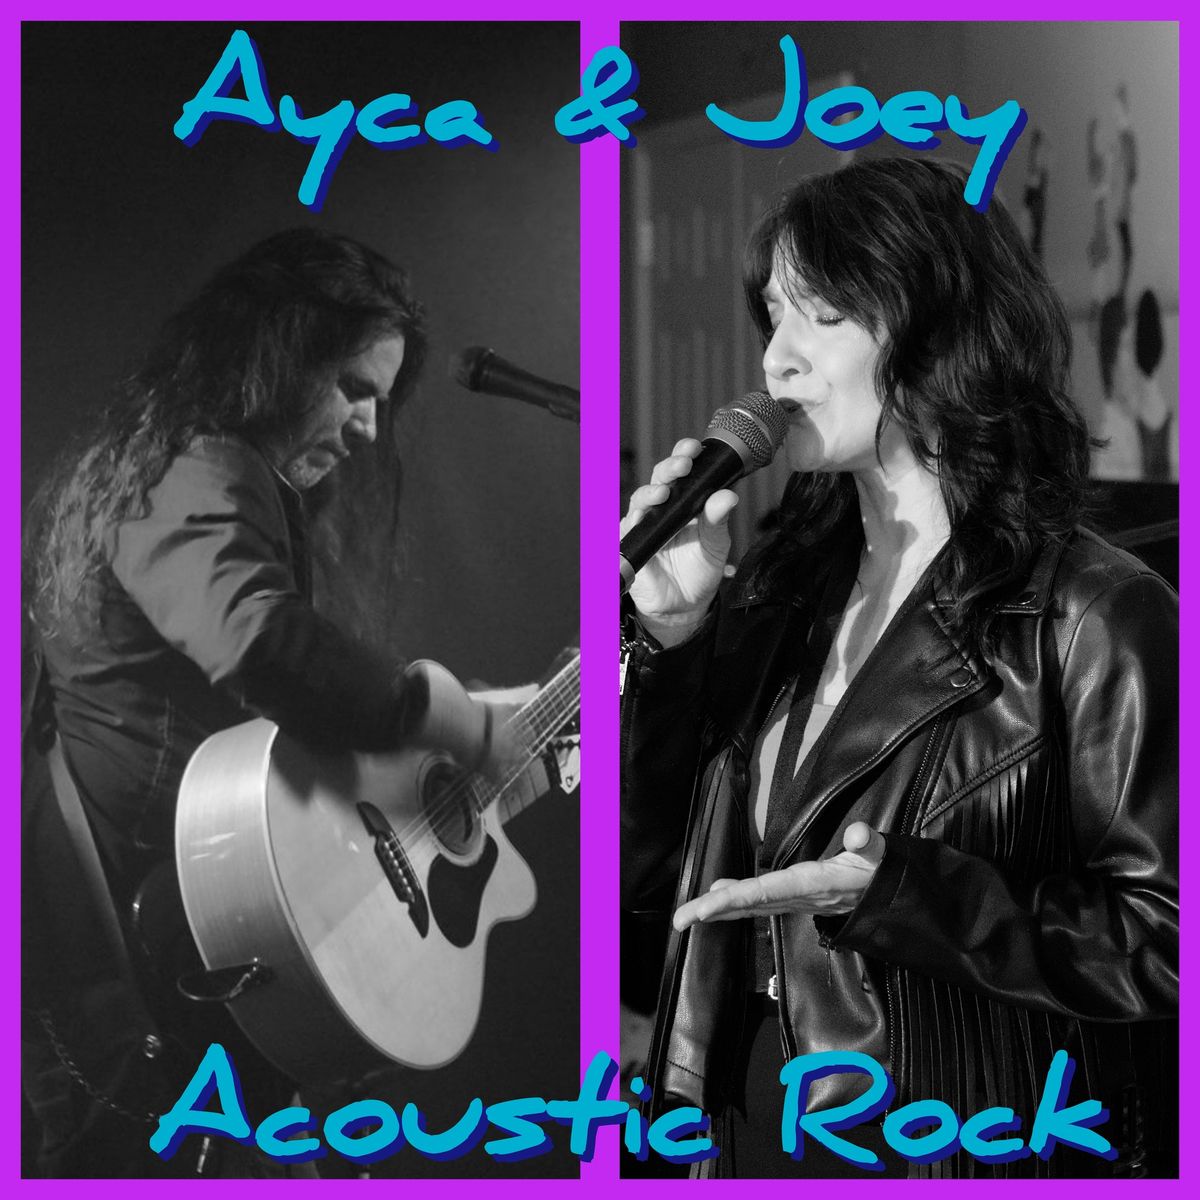 Ayca & Joey Acoustic Rock @35 North